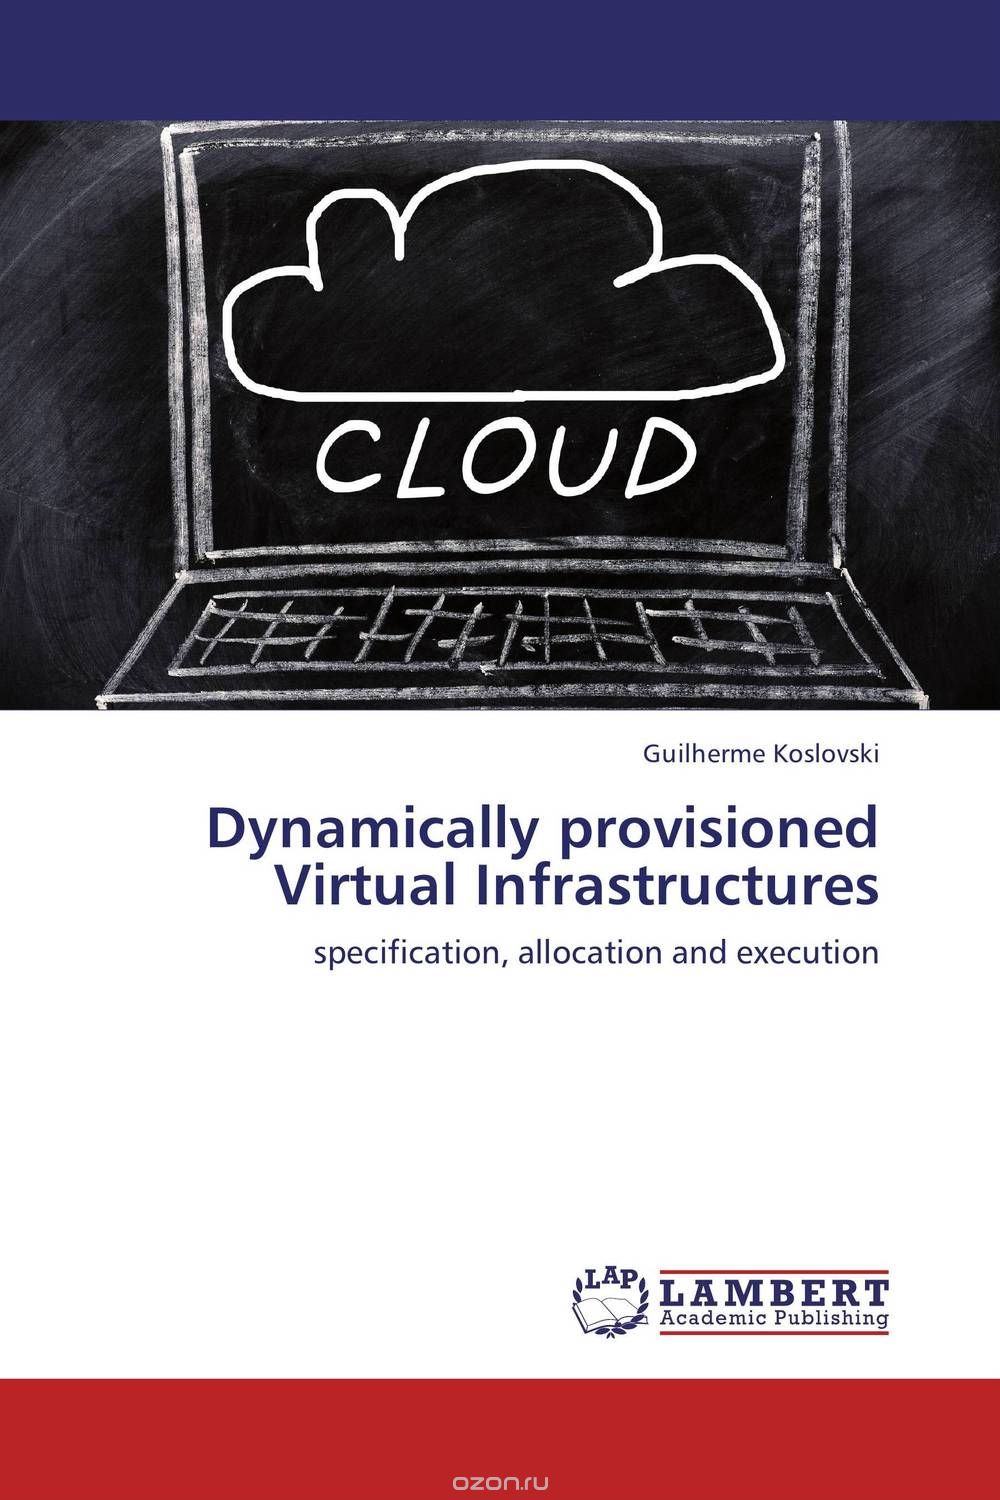 Скачать книгу "Dynamically provisioned Virtual Infrastructures"